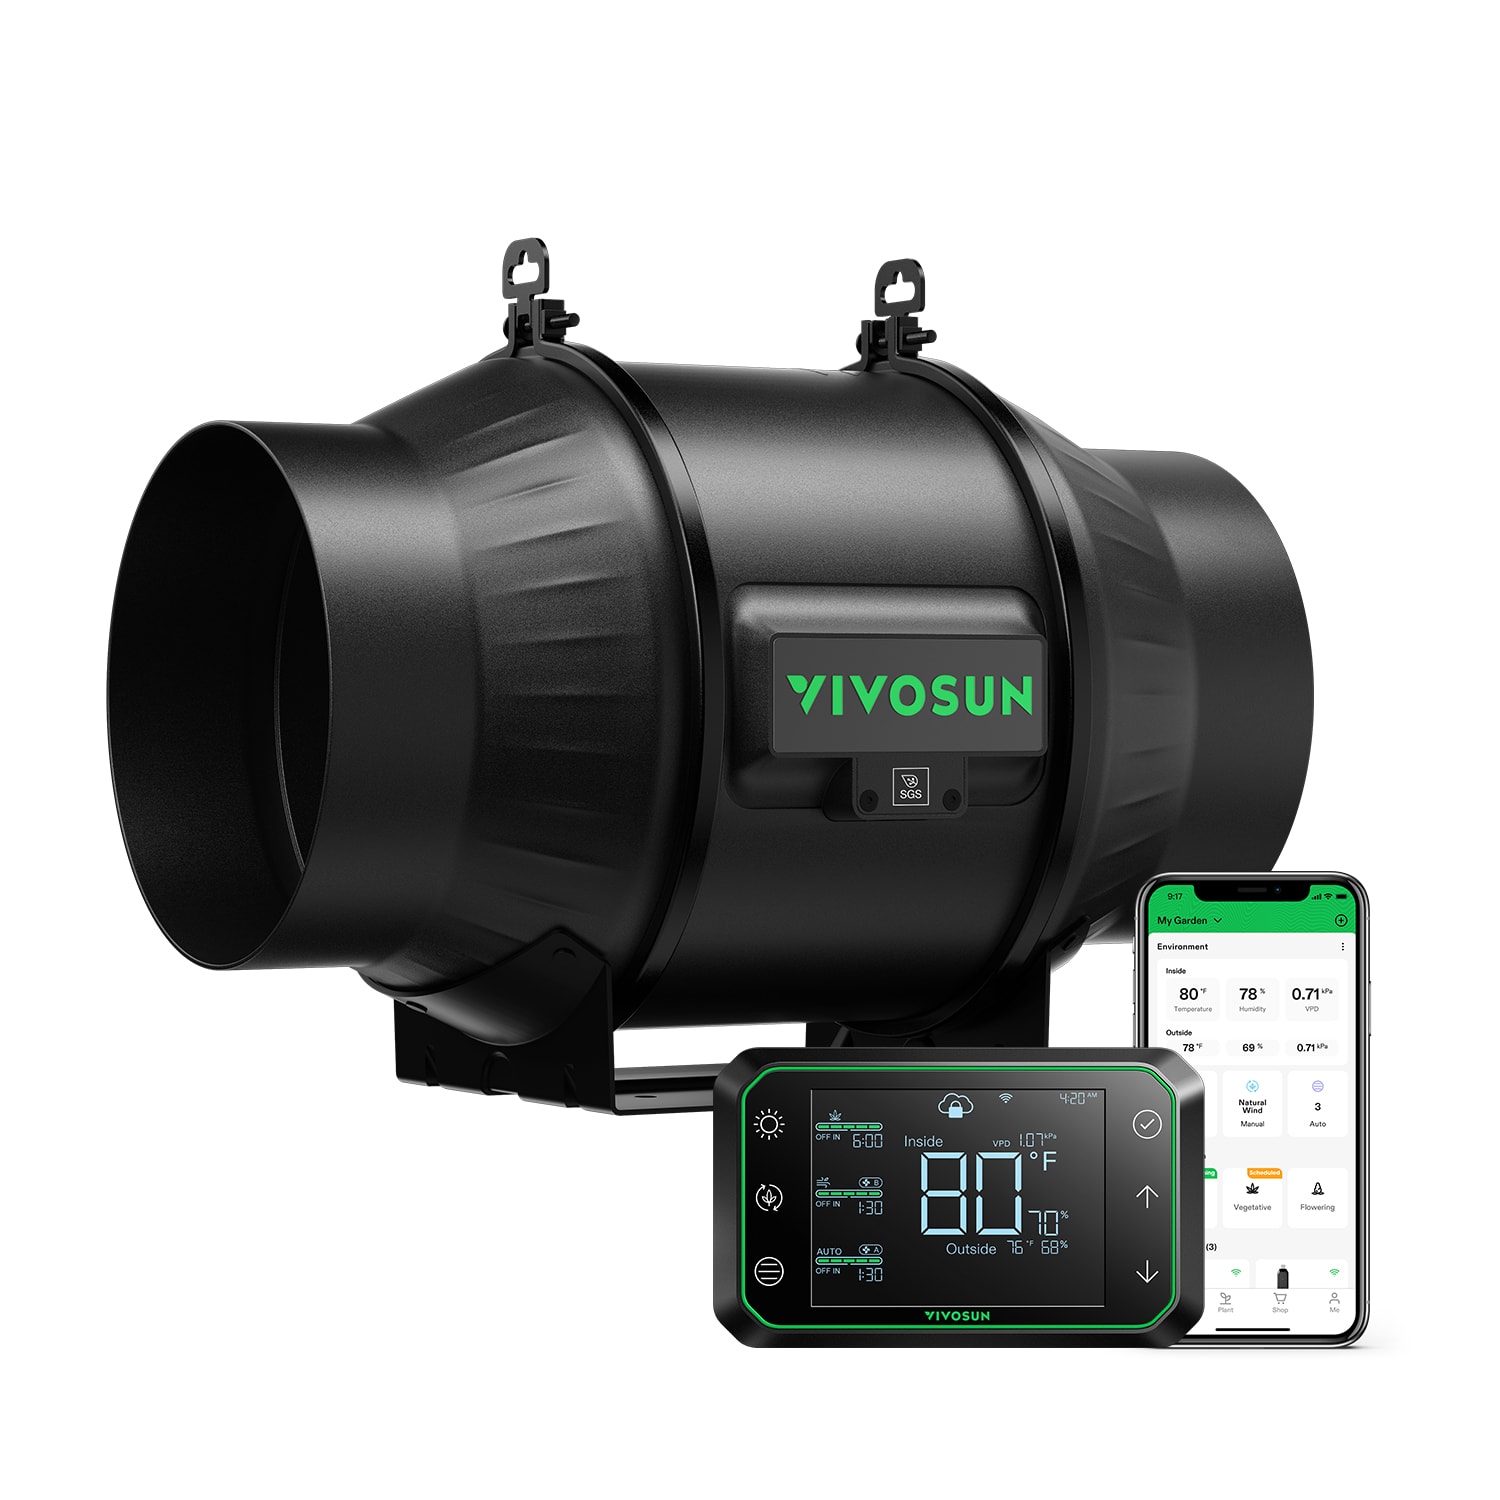 VIVOSUN GrowHub Smart Environmental WiFi-Controller E42A with Temperature, Humidity, VPD, Timer, Cycle, Schedule Controls, Black